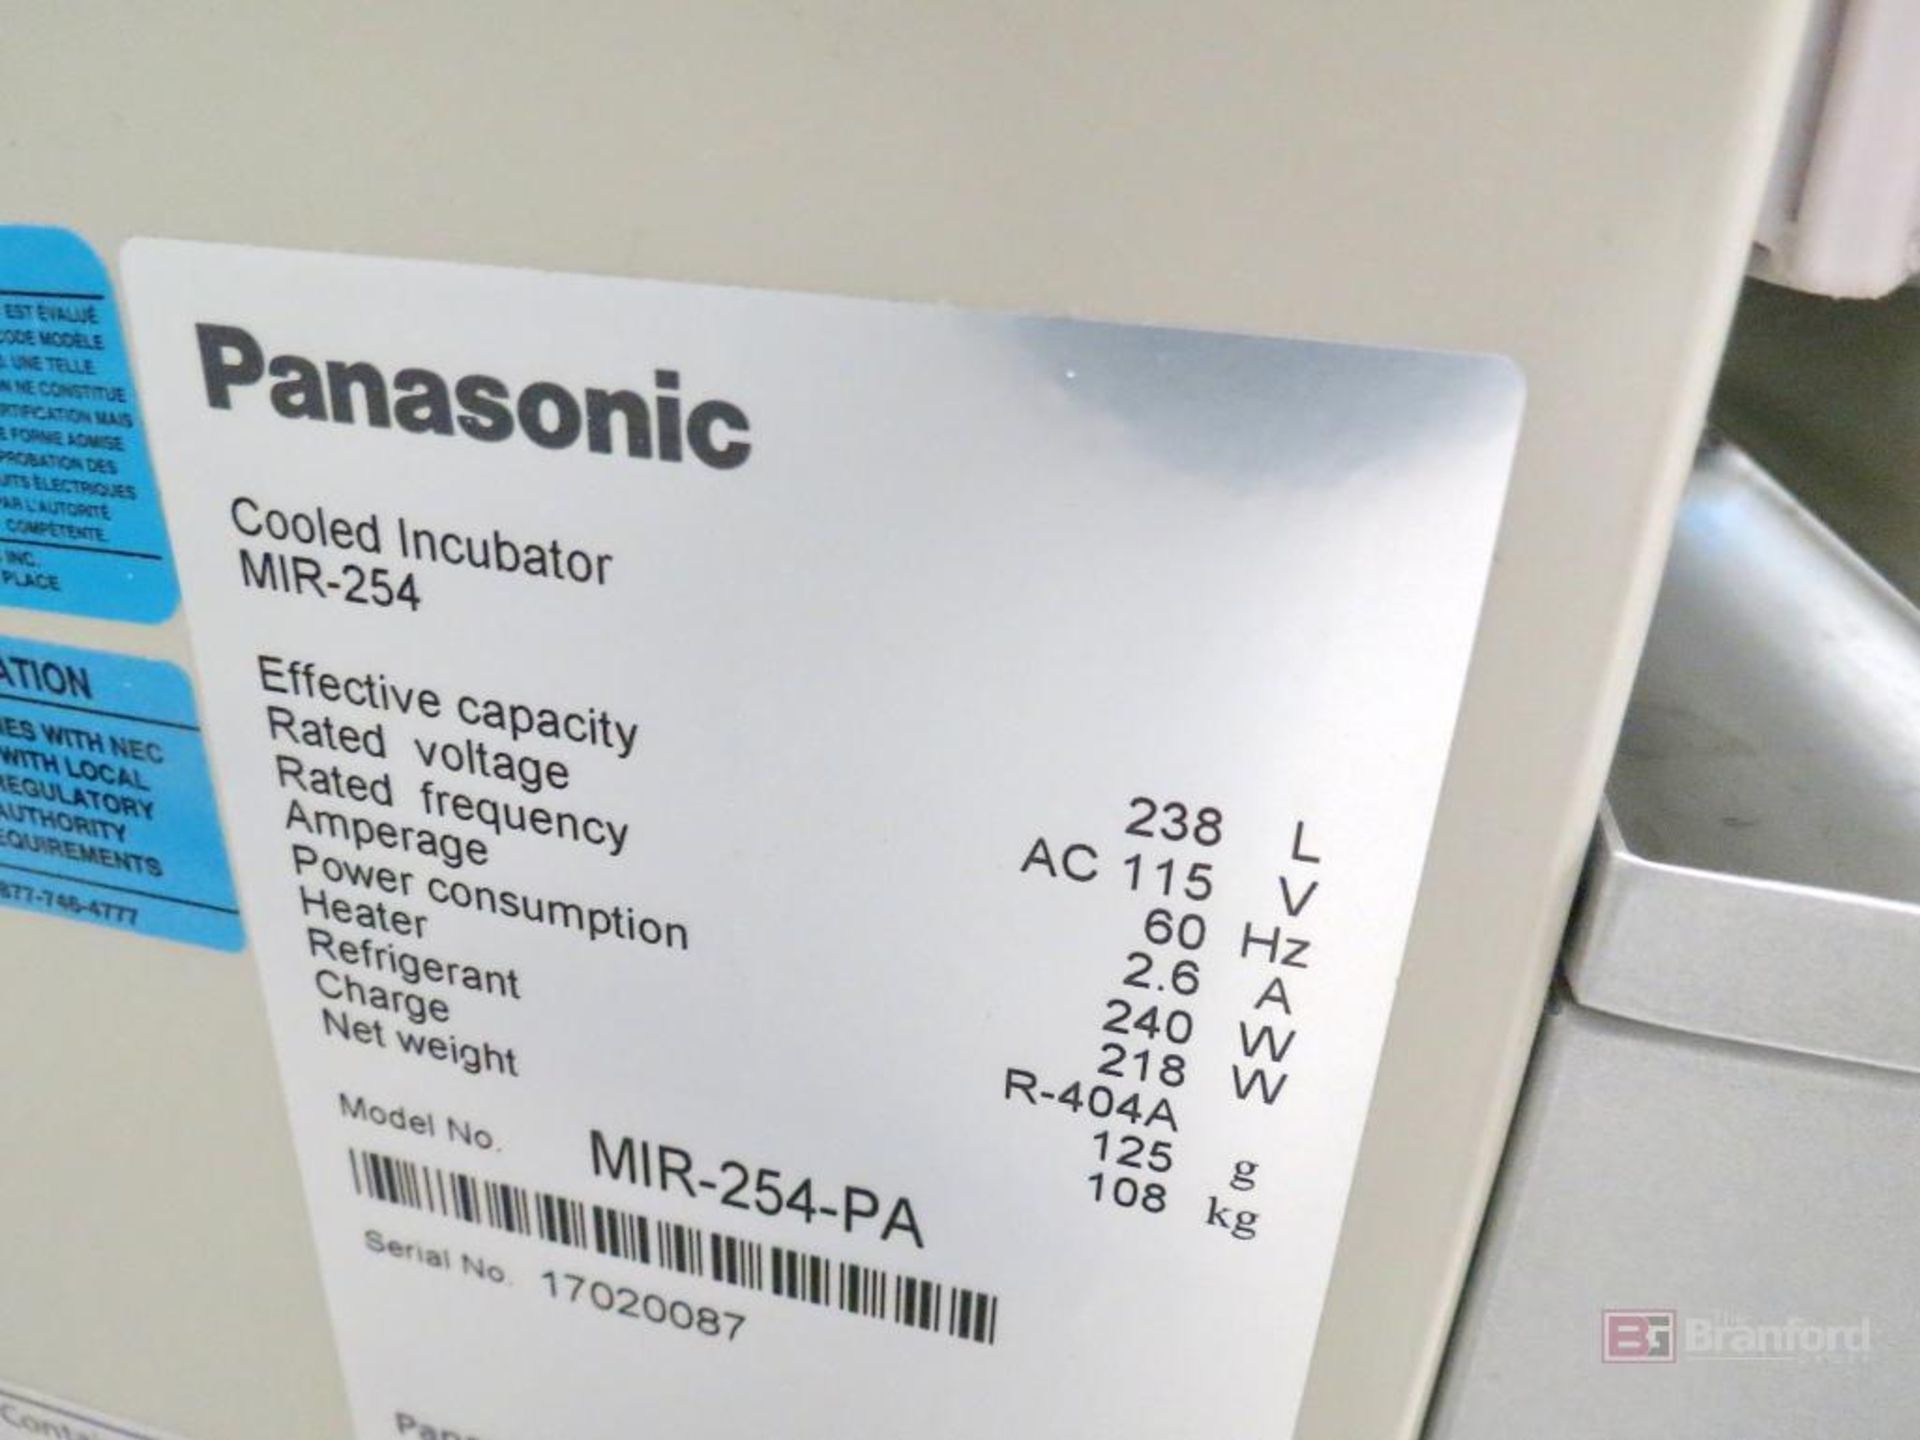 Panasonic MIR-254-PA Refrigerated Incubator - Image 6 of 6